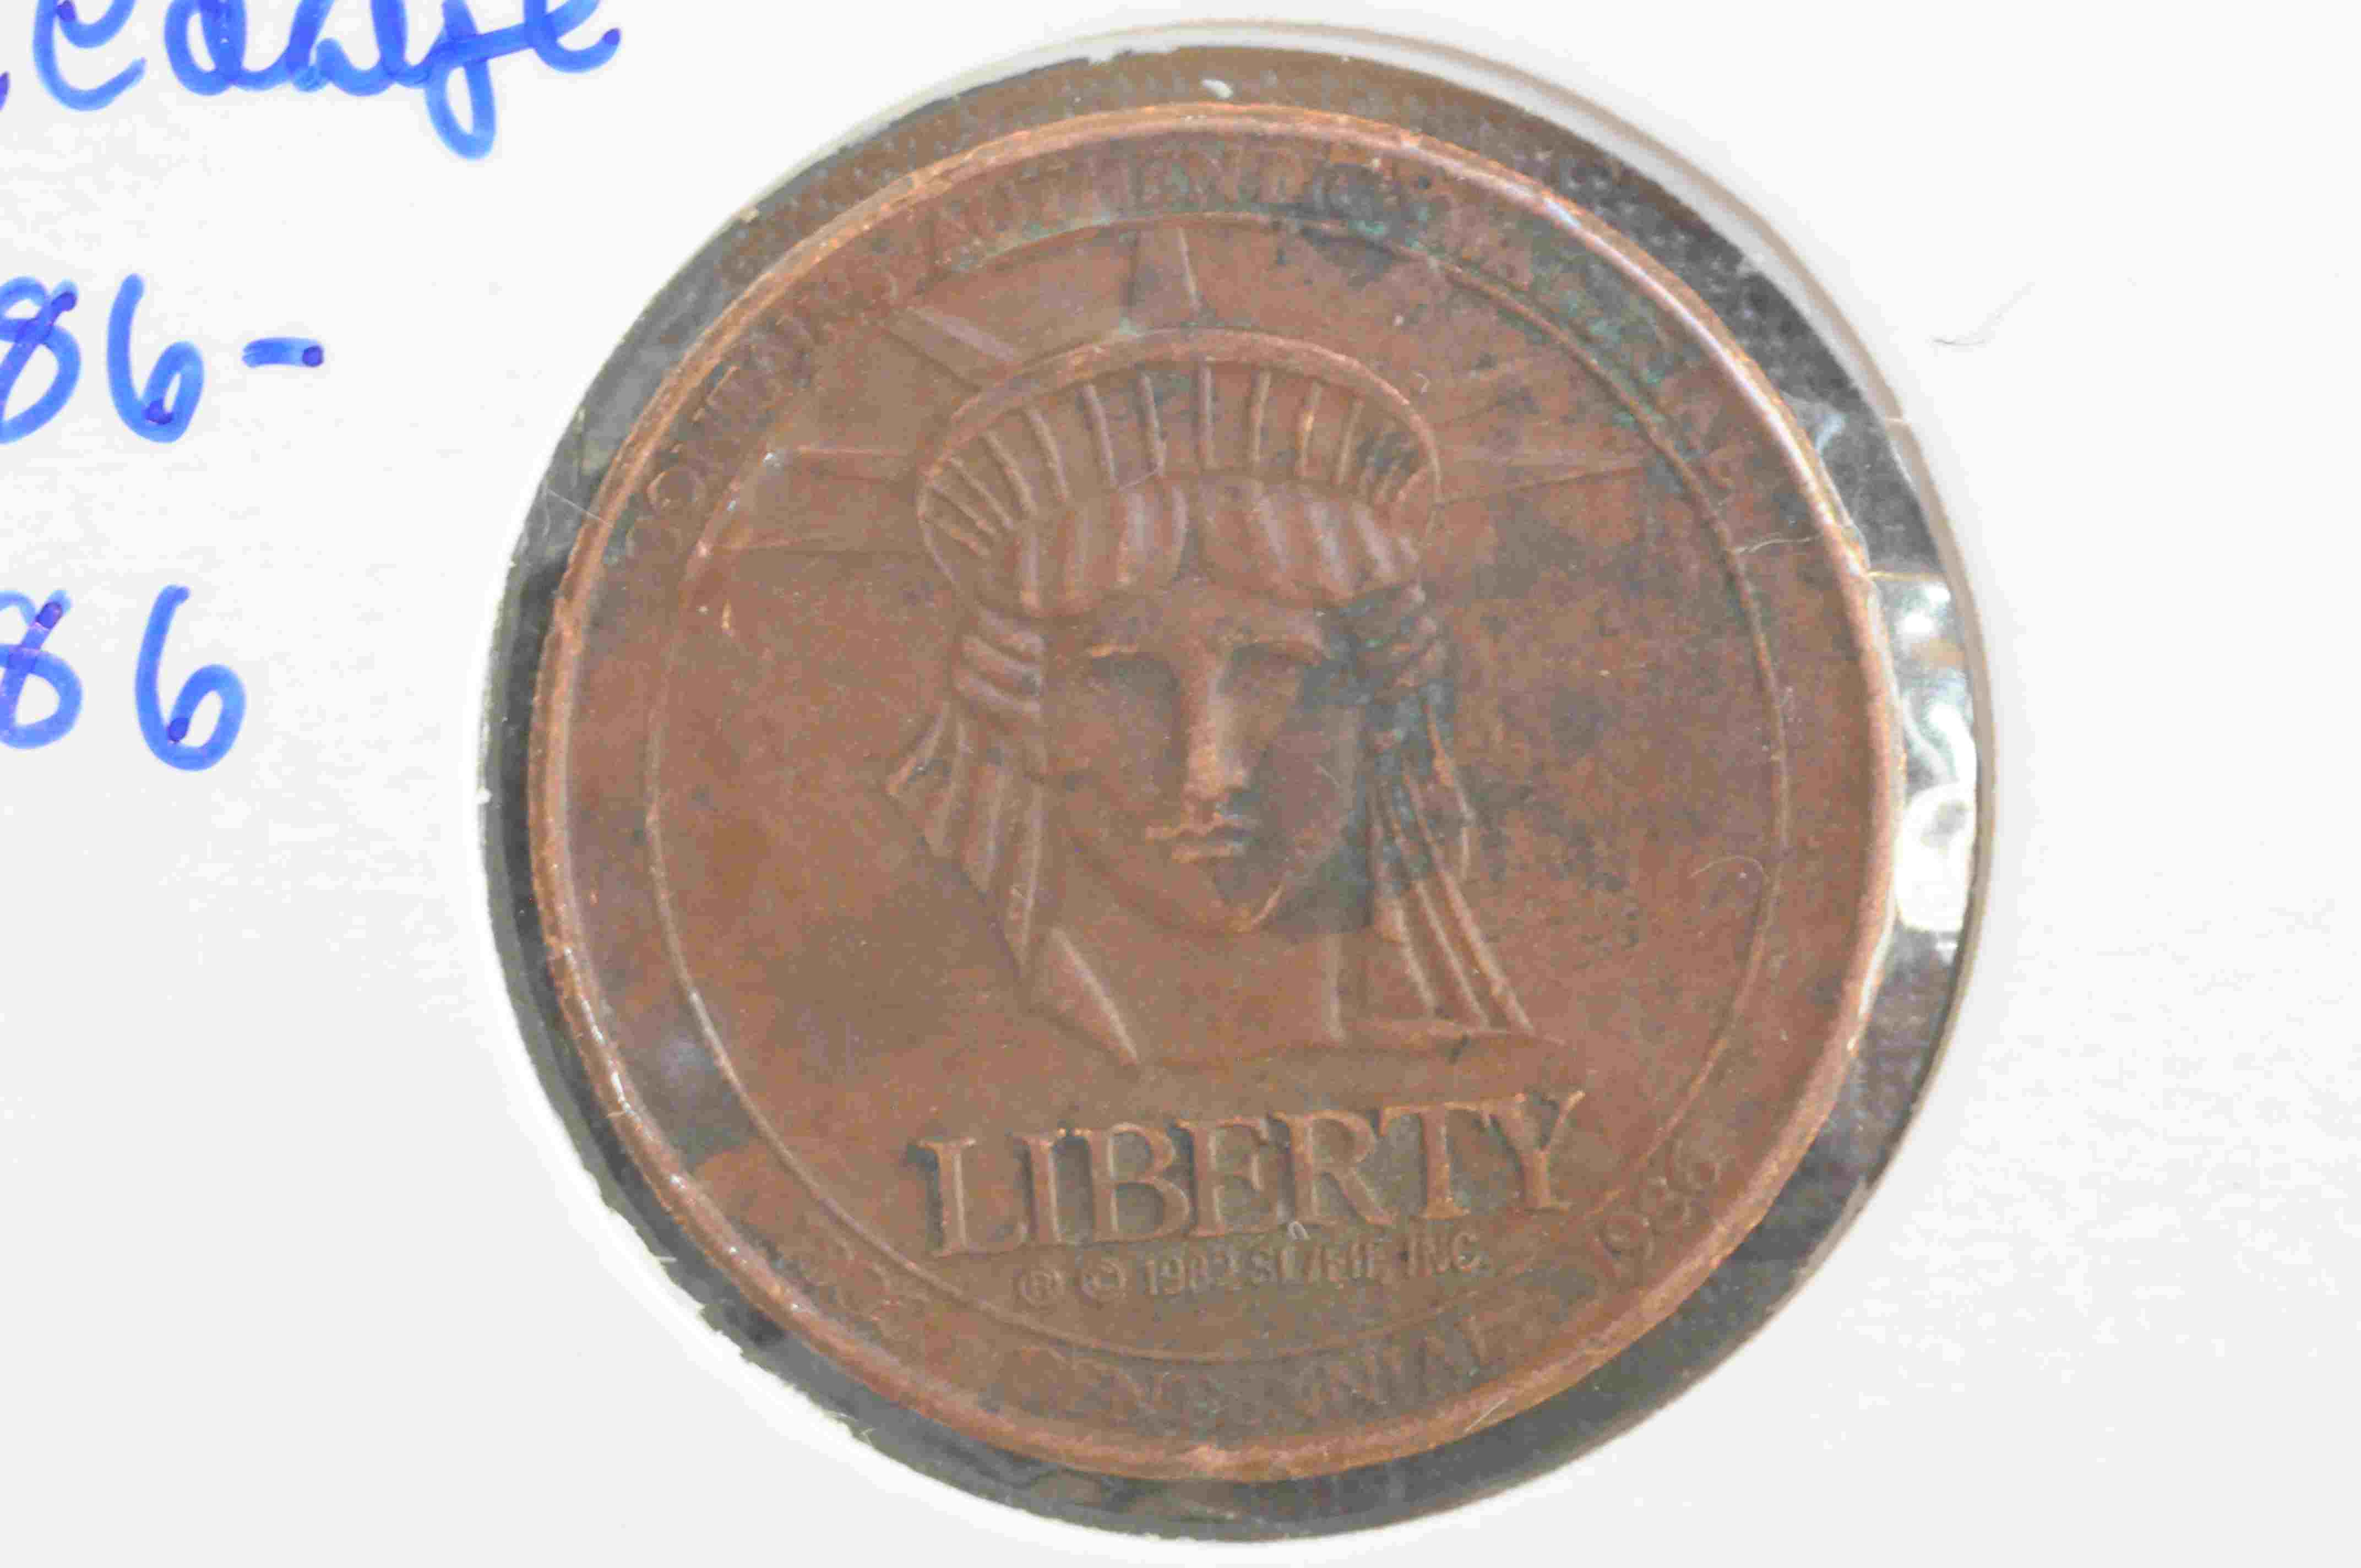 USA medalje 1886-1986 Liberty 100 år kv1+